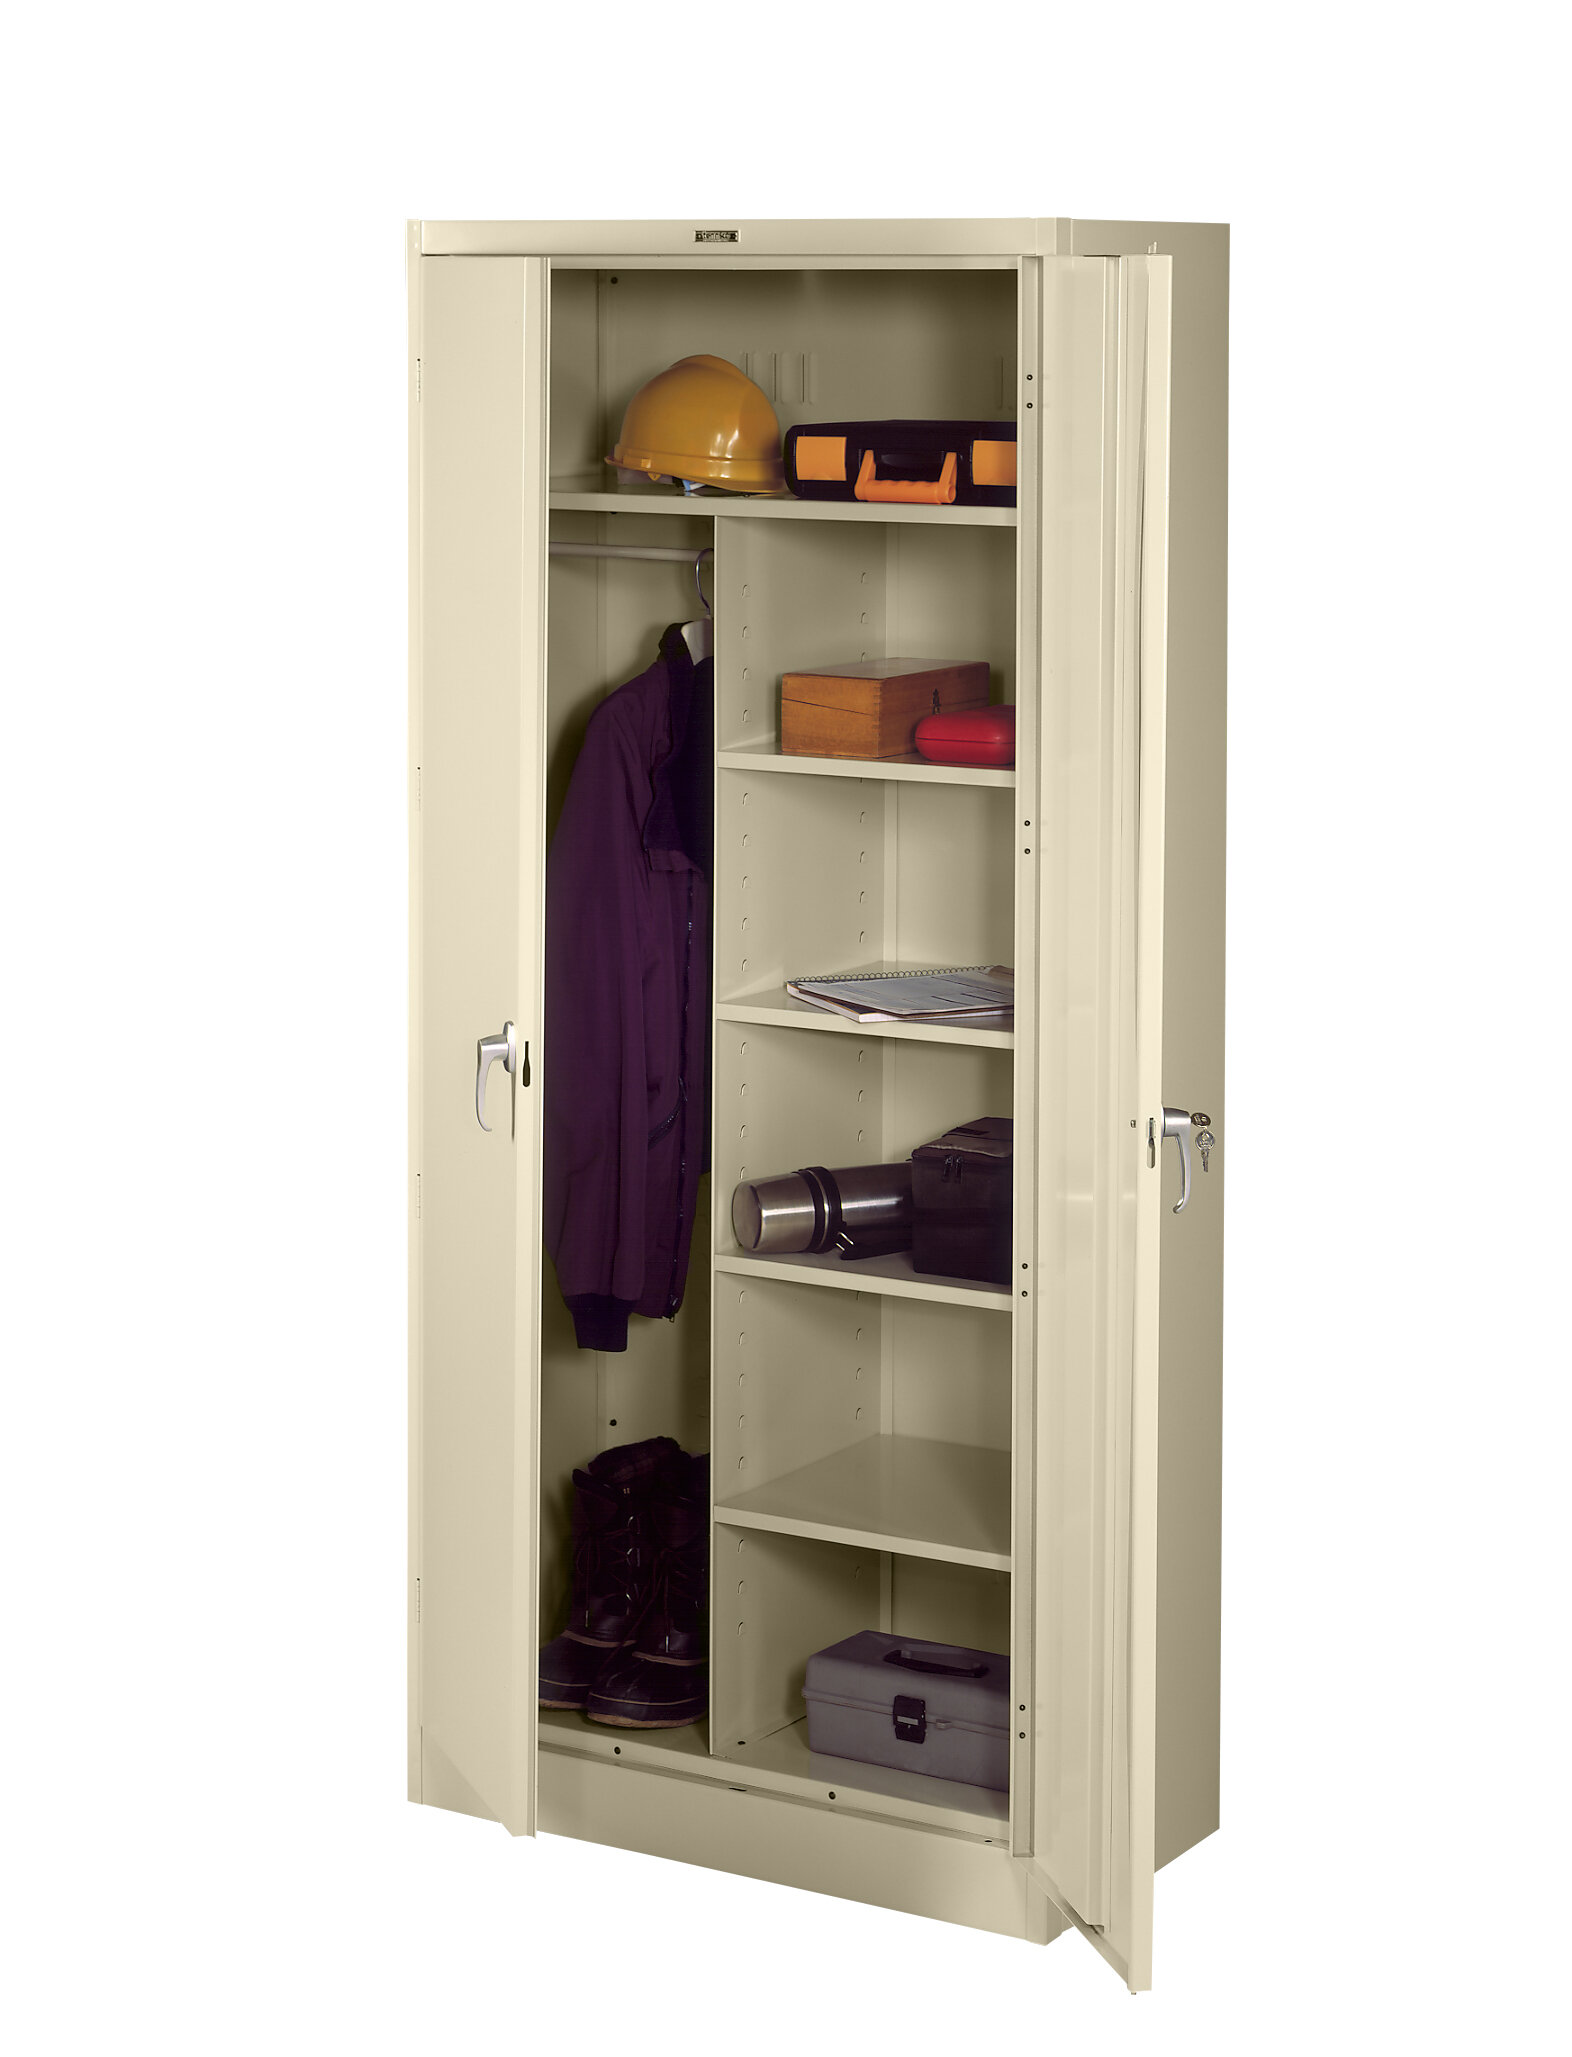 Tennsco Open Style Storage Cabinet 48W x 24D x 78H